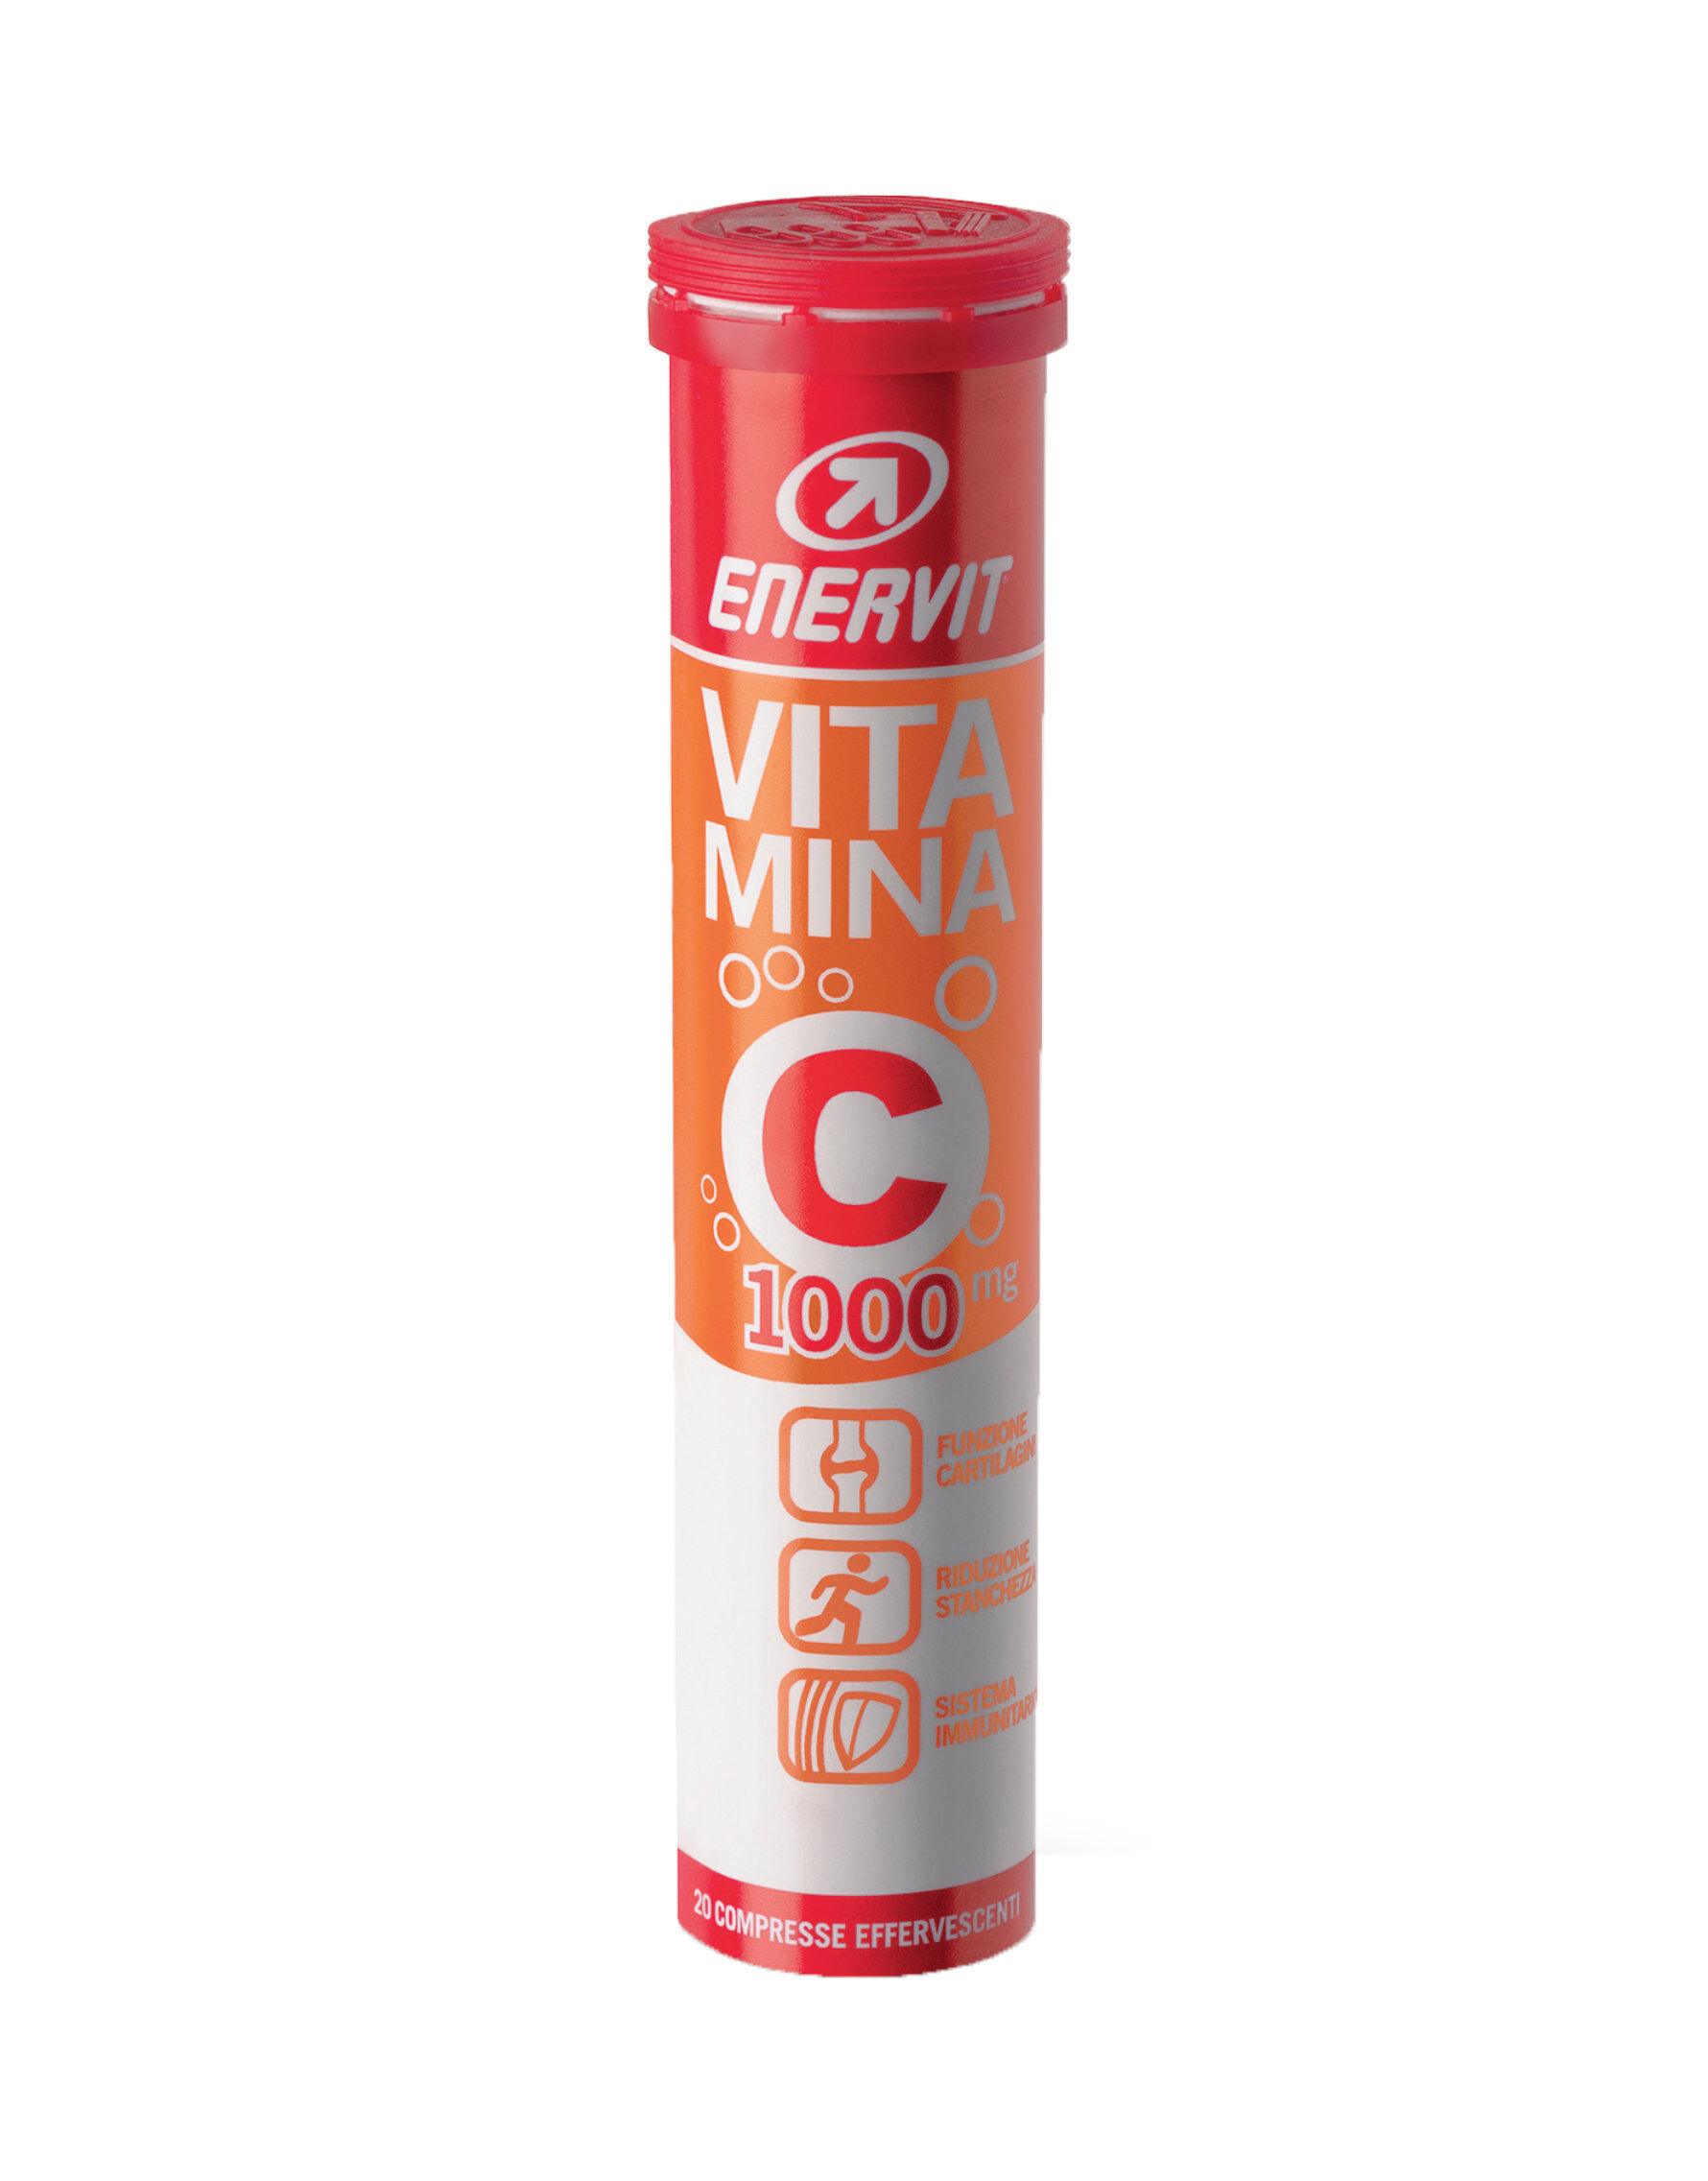 ENERVIT Vitamina C 1000mg 20 Compresse Effervescenti